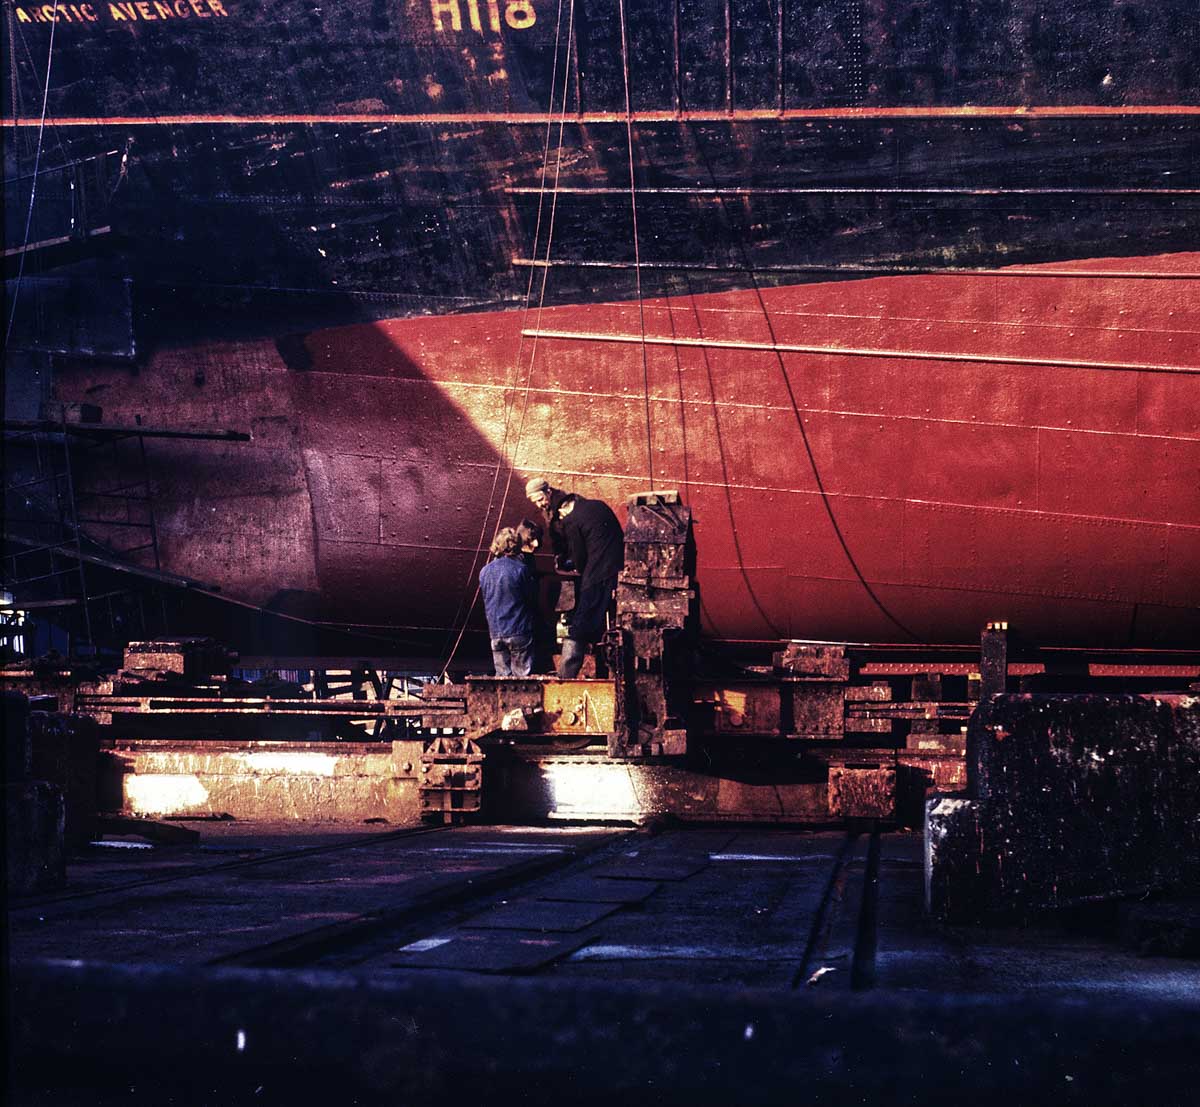 Repairing a deep sea trawler, Grimsby Docks, Grimsby, UK, Mamiya C33, 105 Sekor, Ektachrome